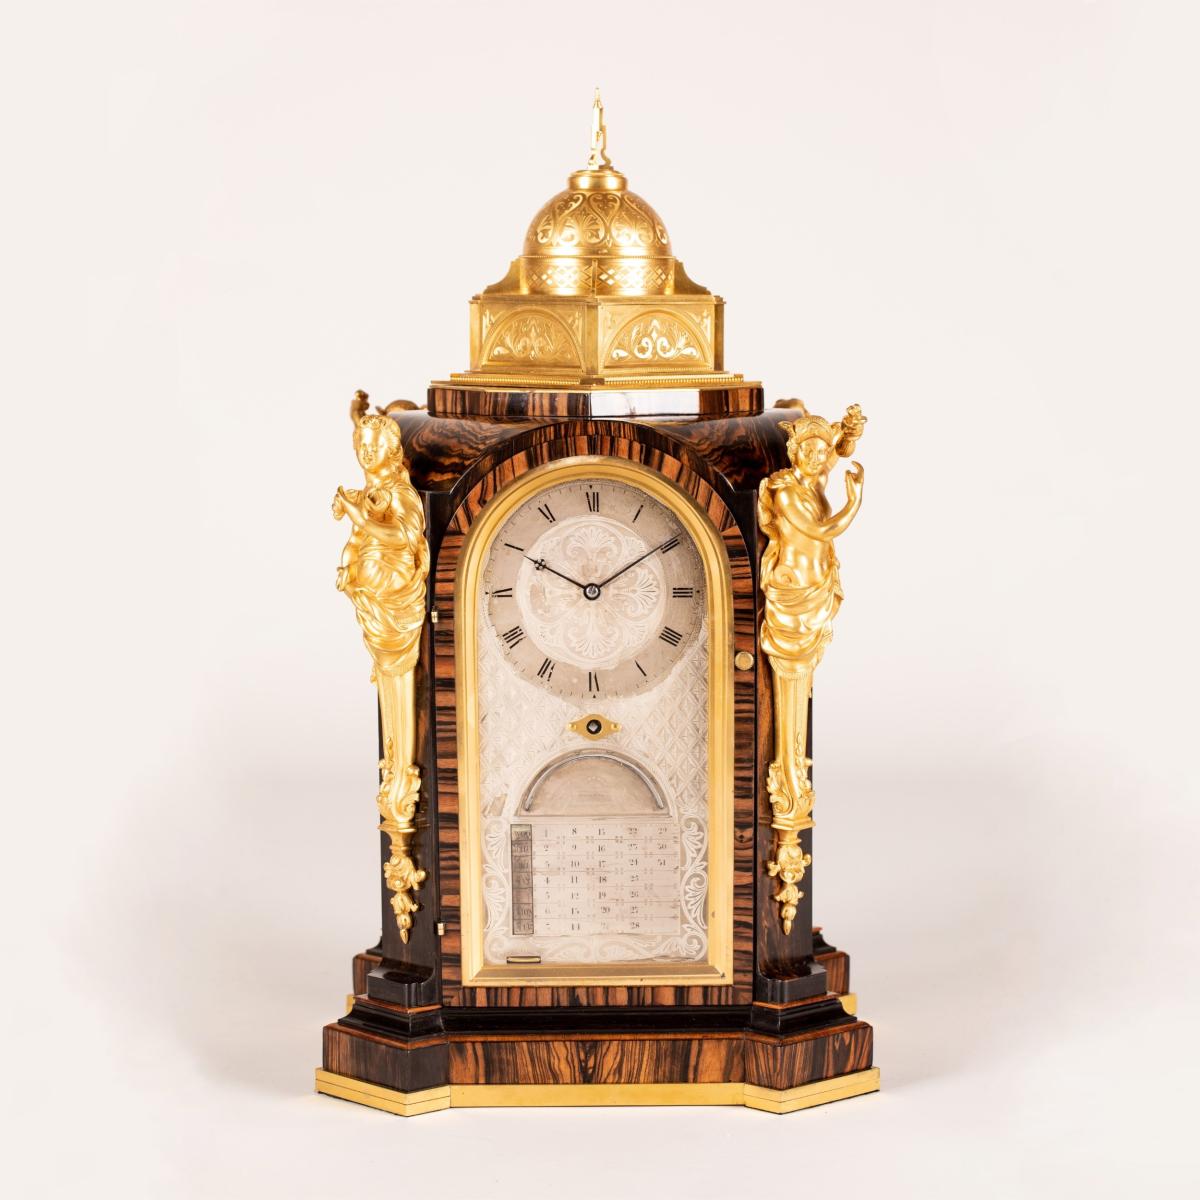 A Superb Coromandel-Veneered Mantle Clock by Thomas Cole